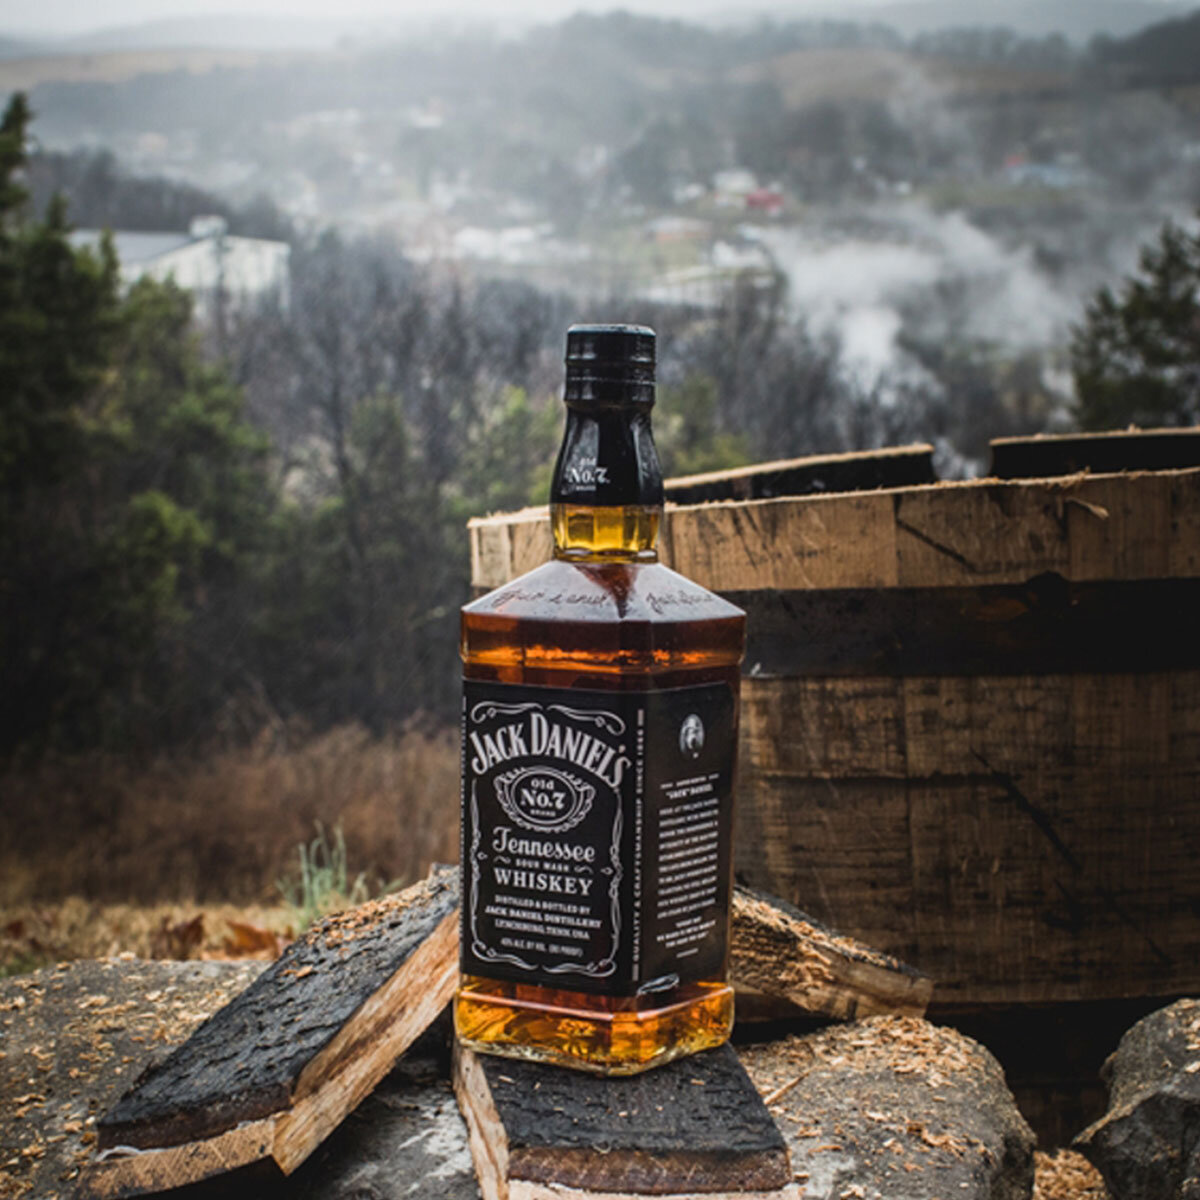 Jack Daniels Tennessee Whiskey 1L